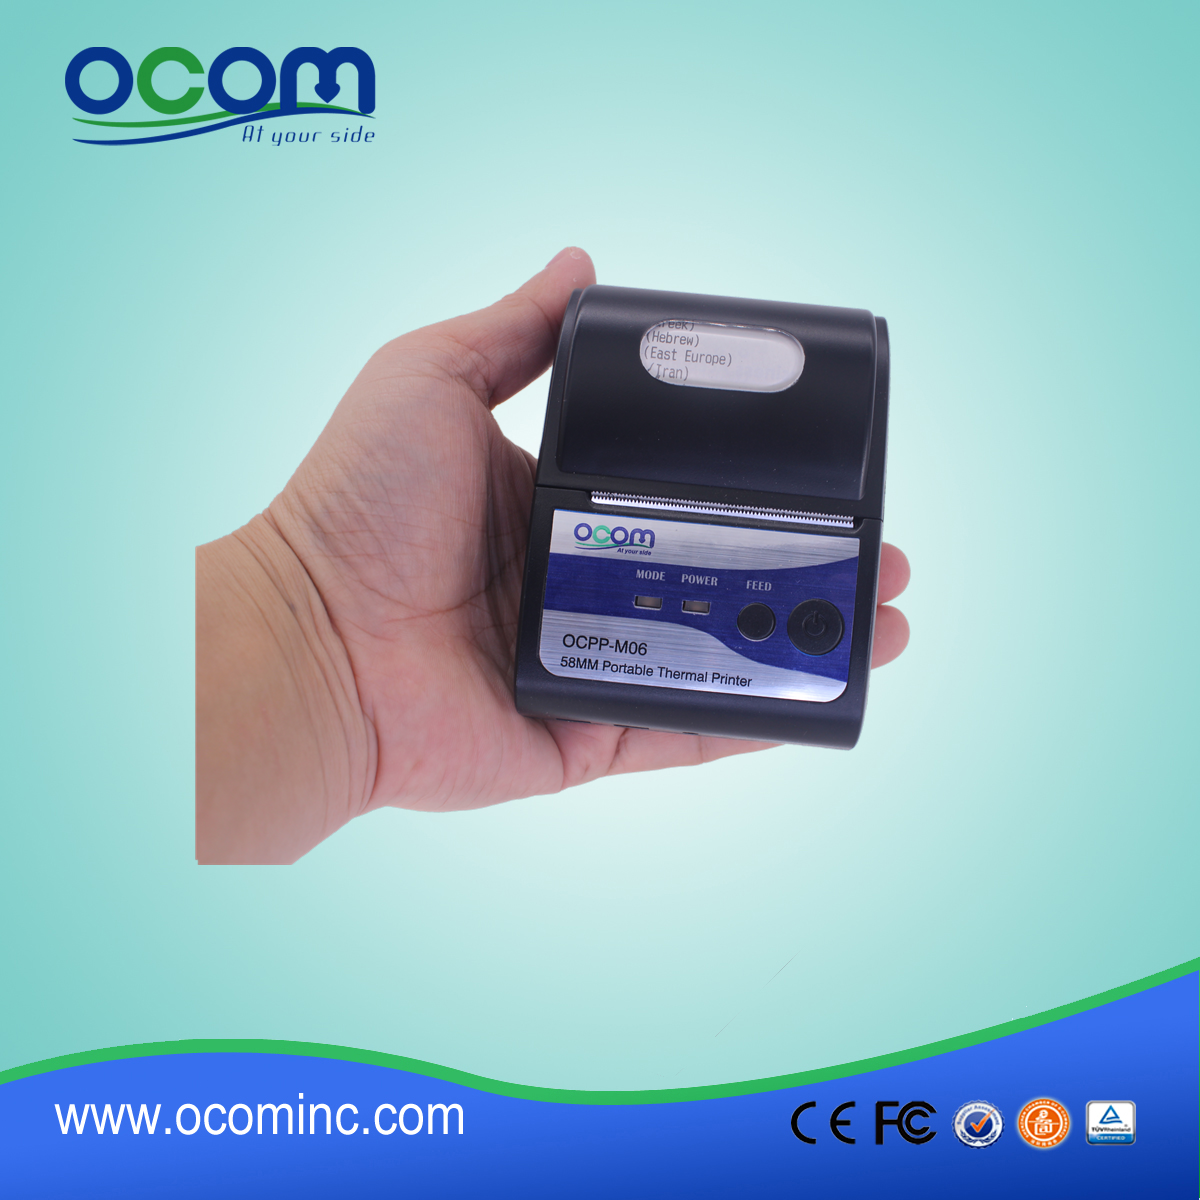 OCPP -M06 Imprimante de reçus thermique Bluetooth androïde mini